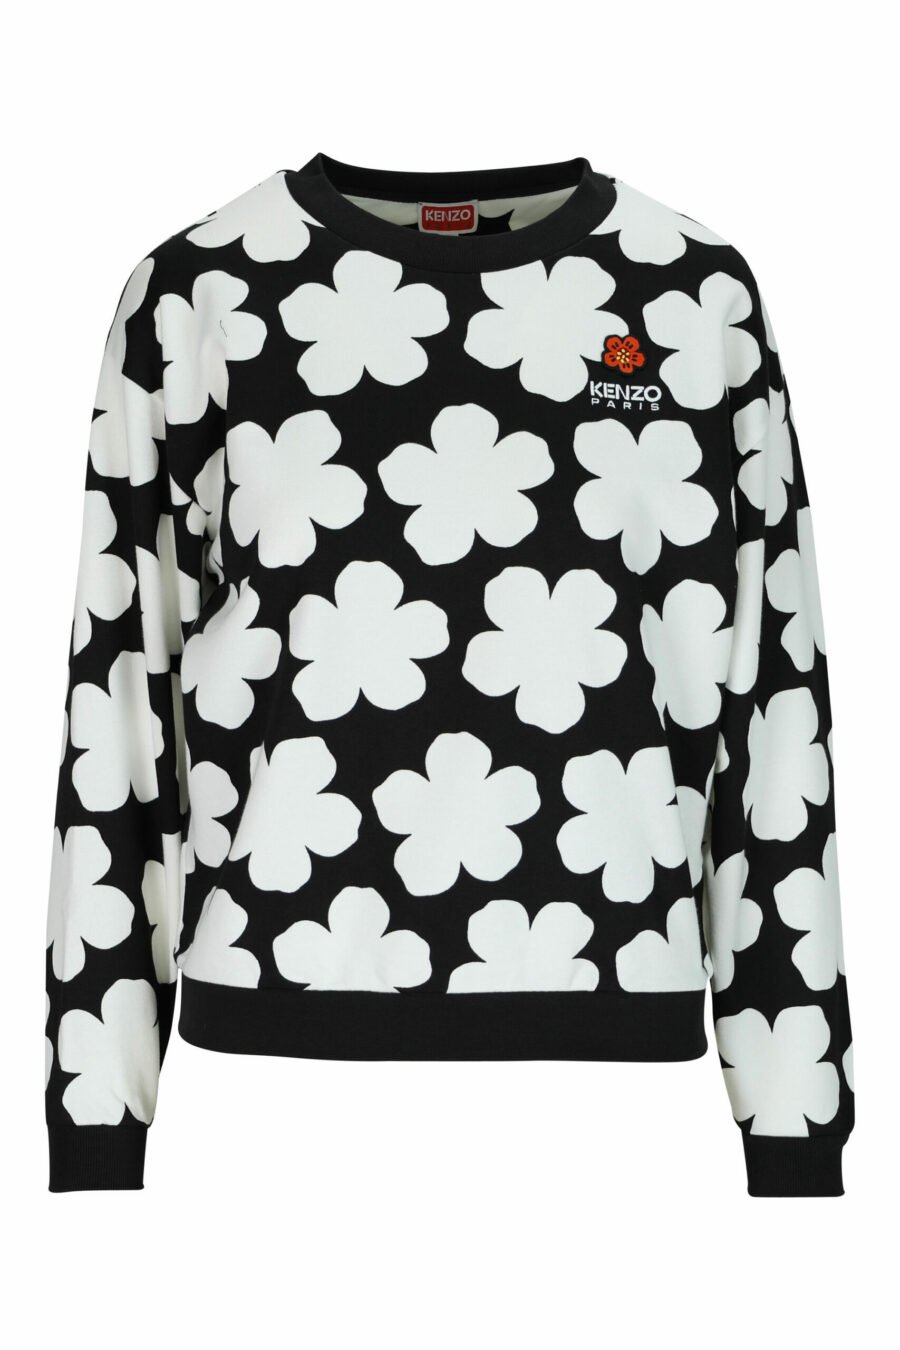 Schwarzes Sweatshirt "all over mini flower kenzo" - 3612230570351 skaliert